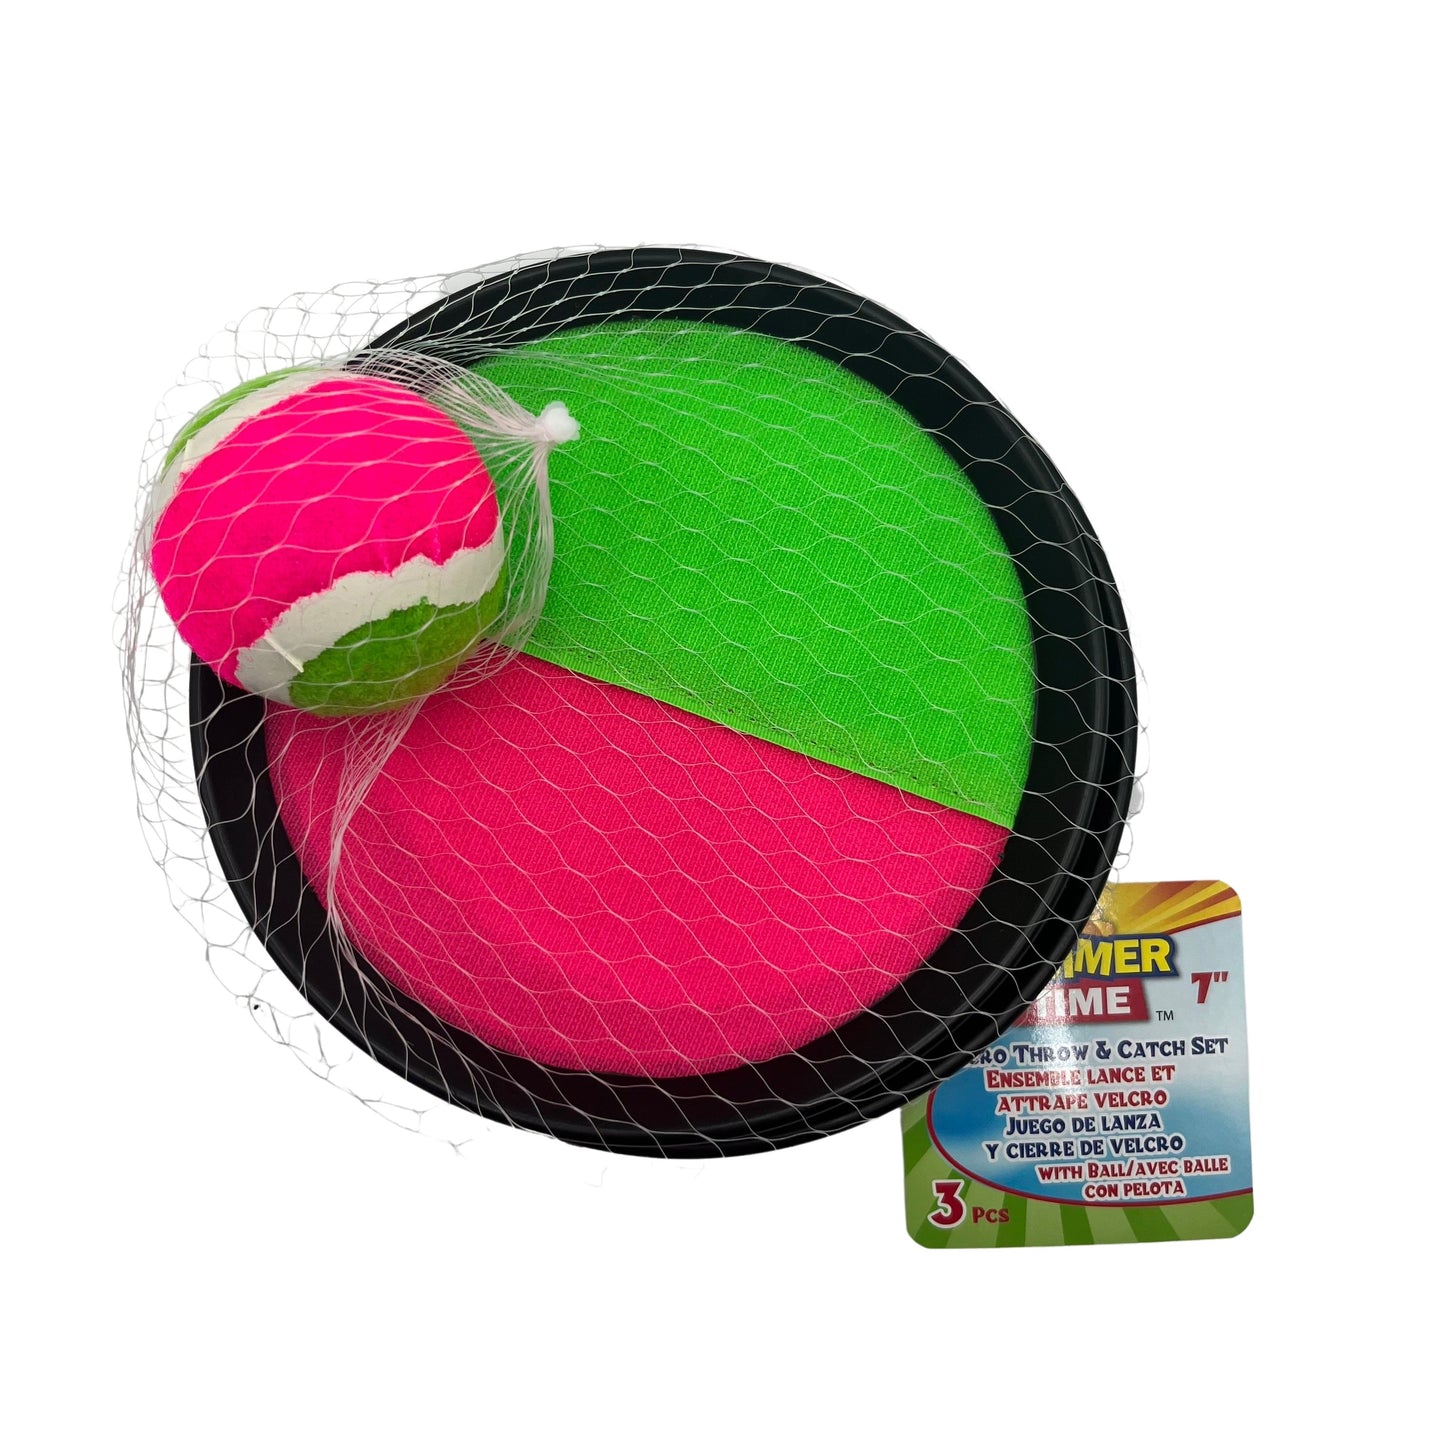 Velcro Throw & Catch Set W/ball